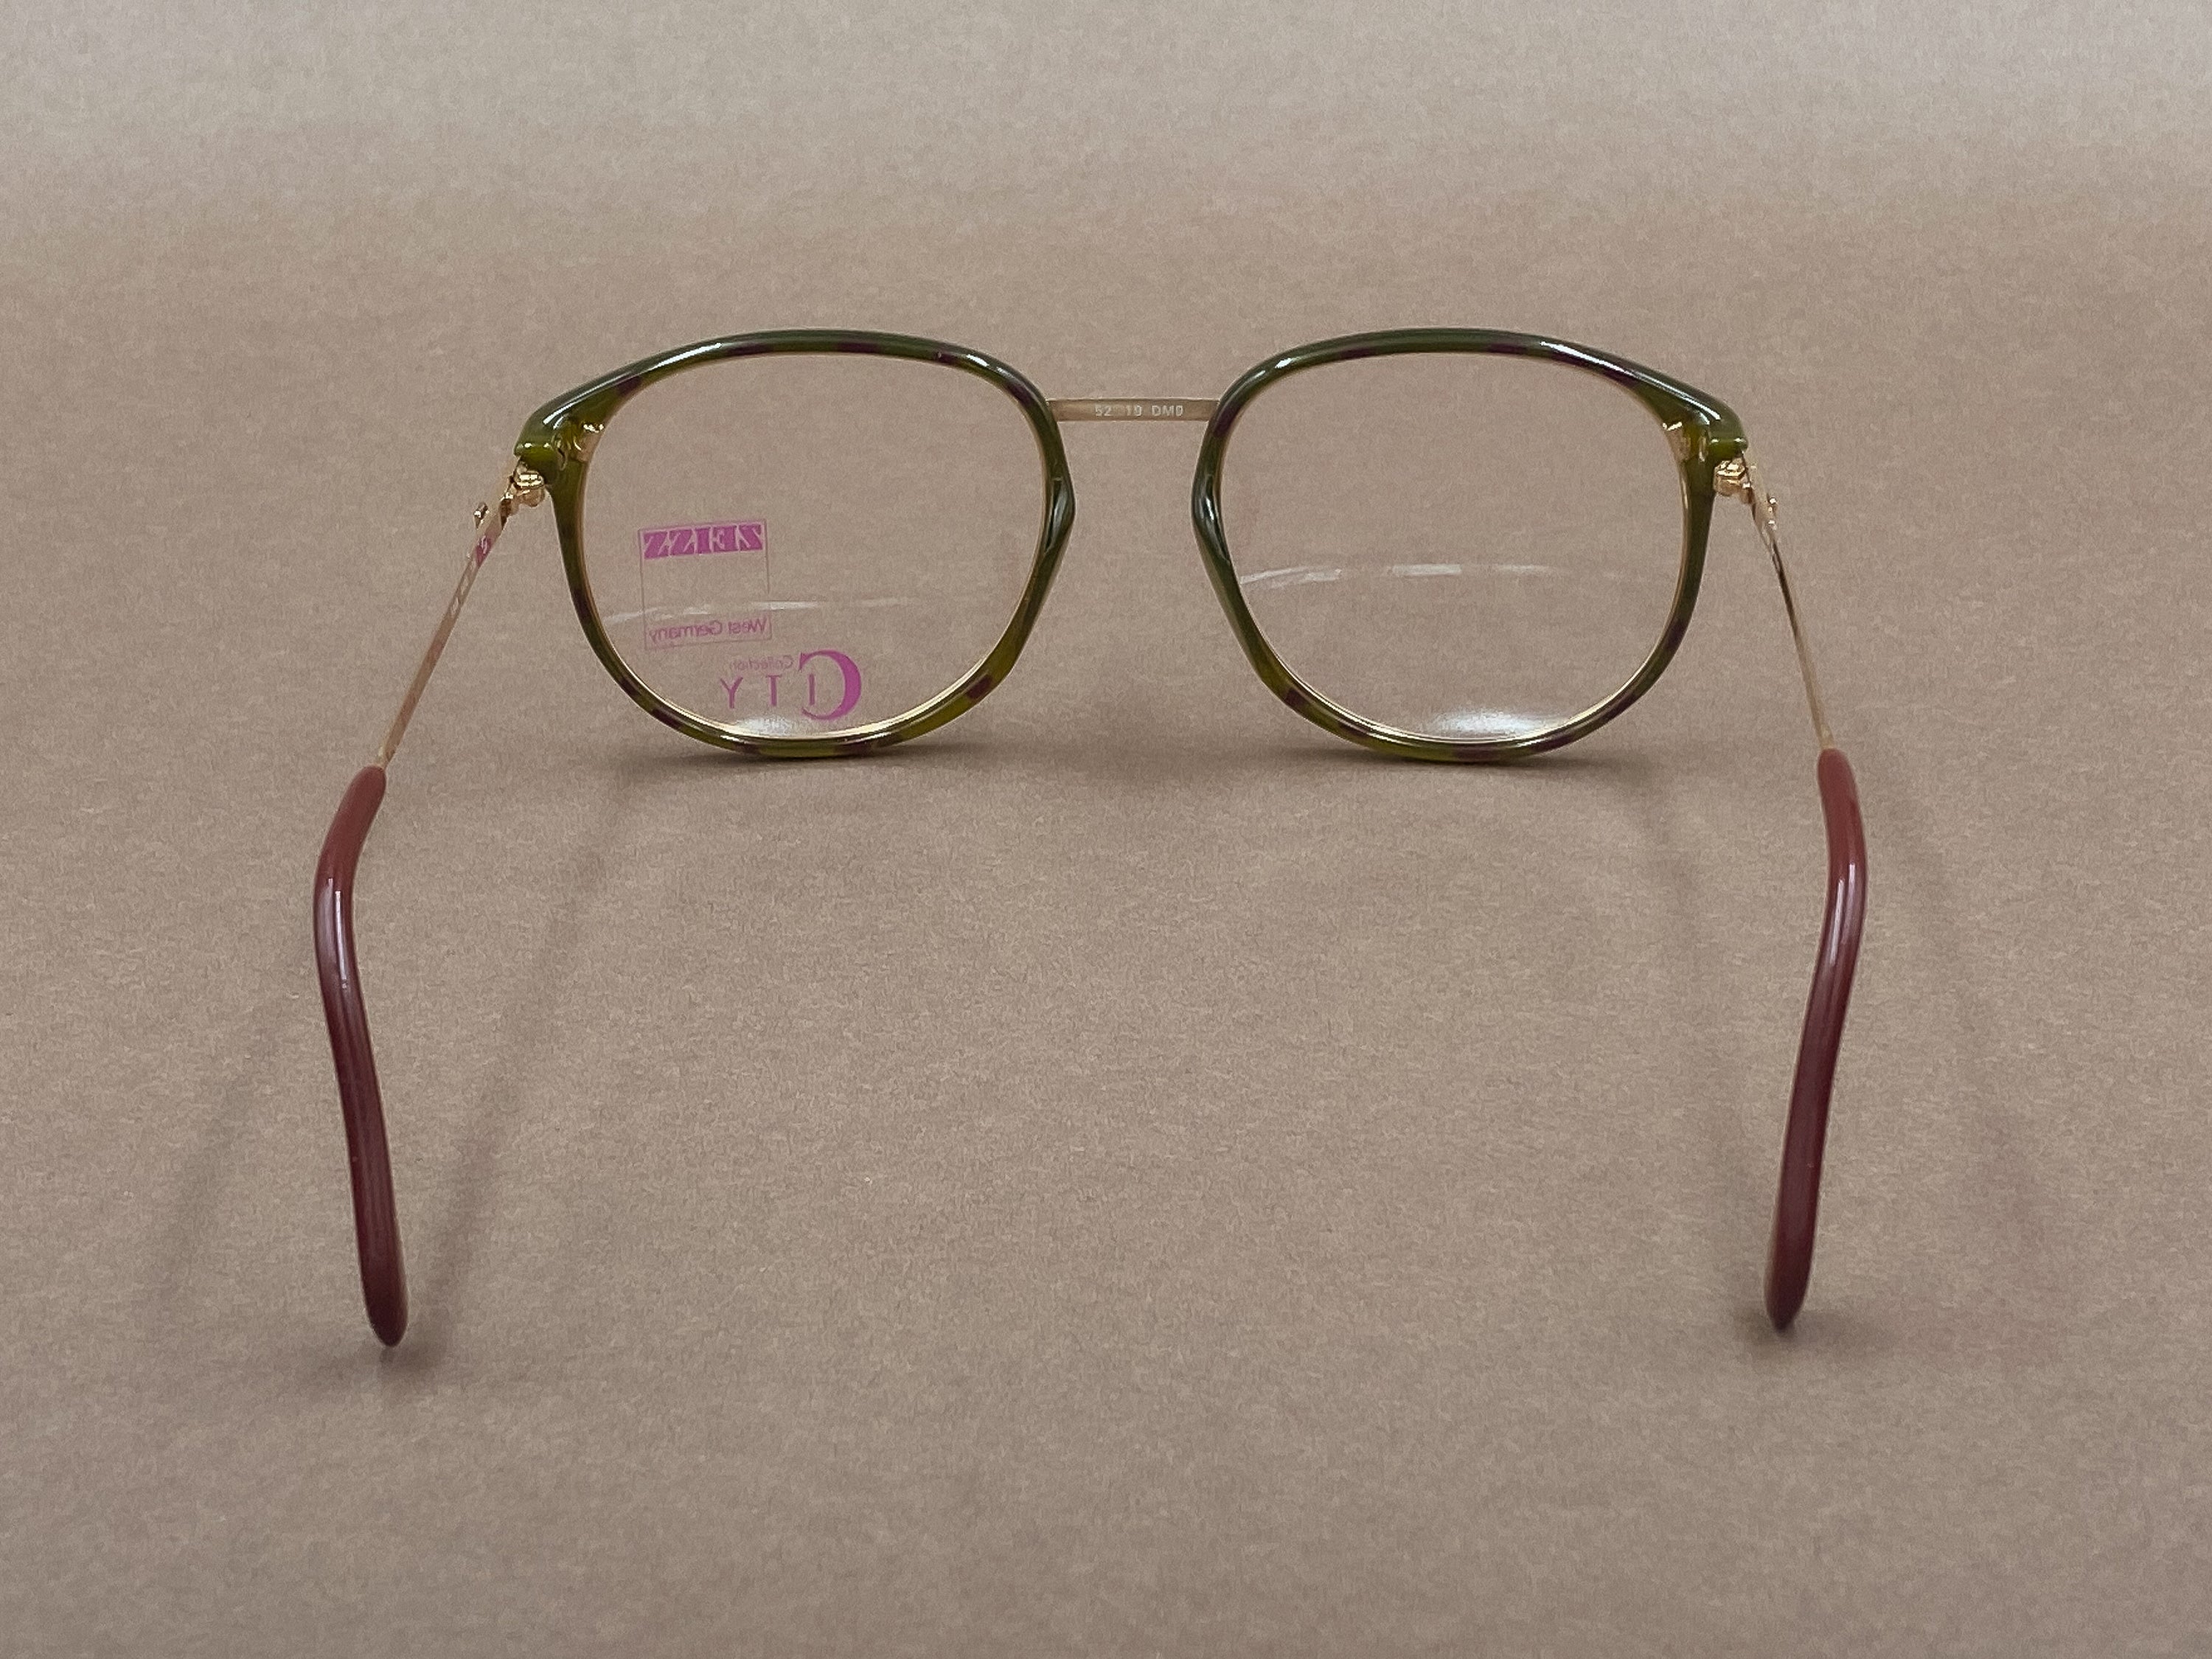 Zeiss 5948 eyeglasses